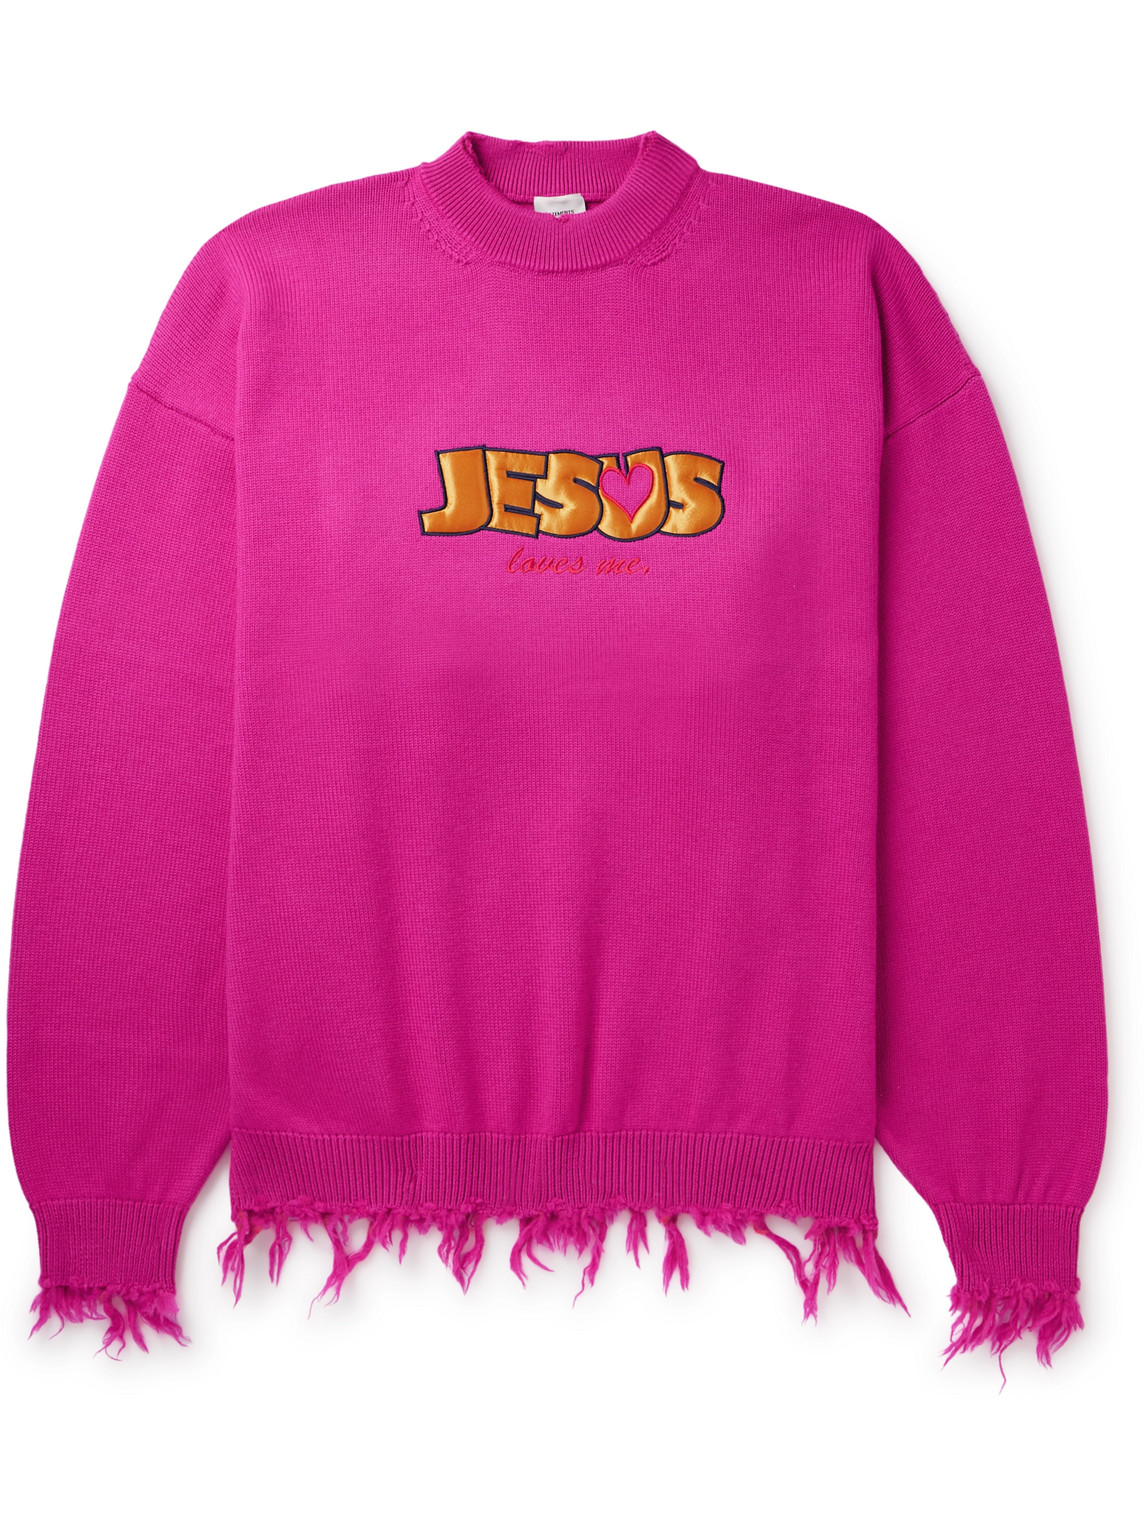 VETEMENTS - Jesus Loves You Distressed Merino Wool Sweater - Men - Pink - XL von VETEMENTS